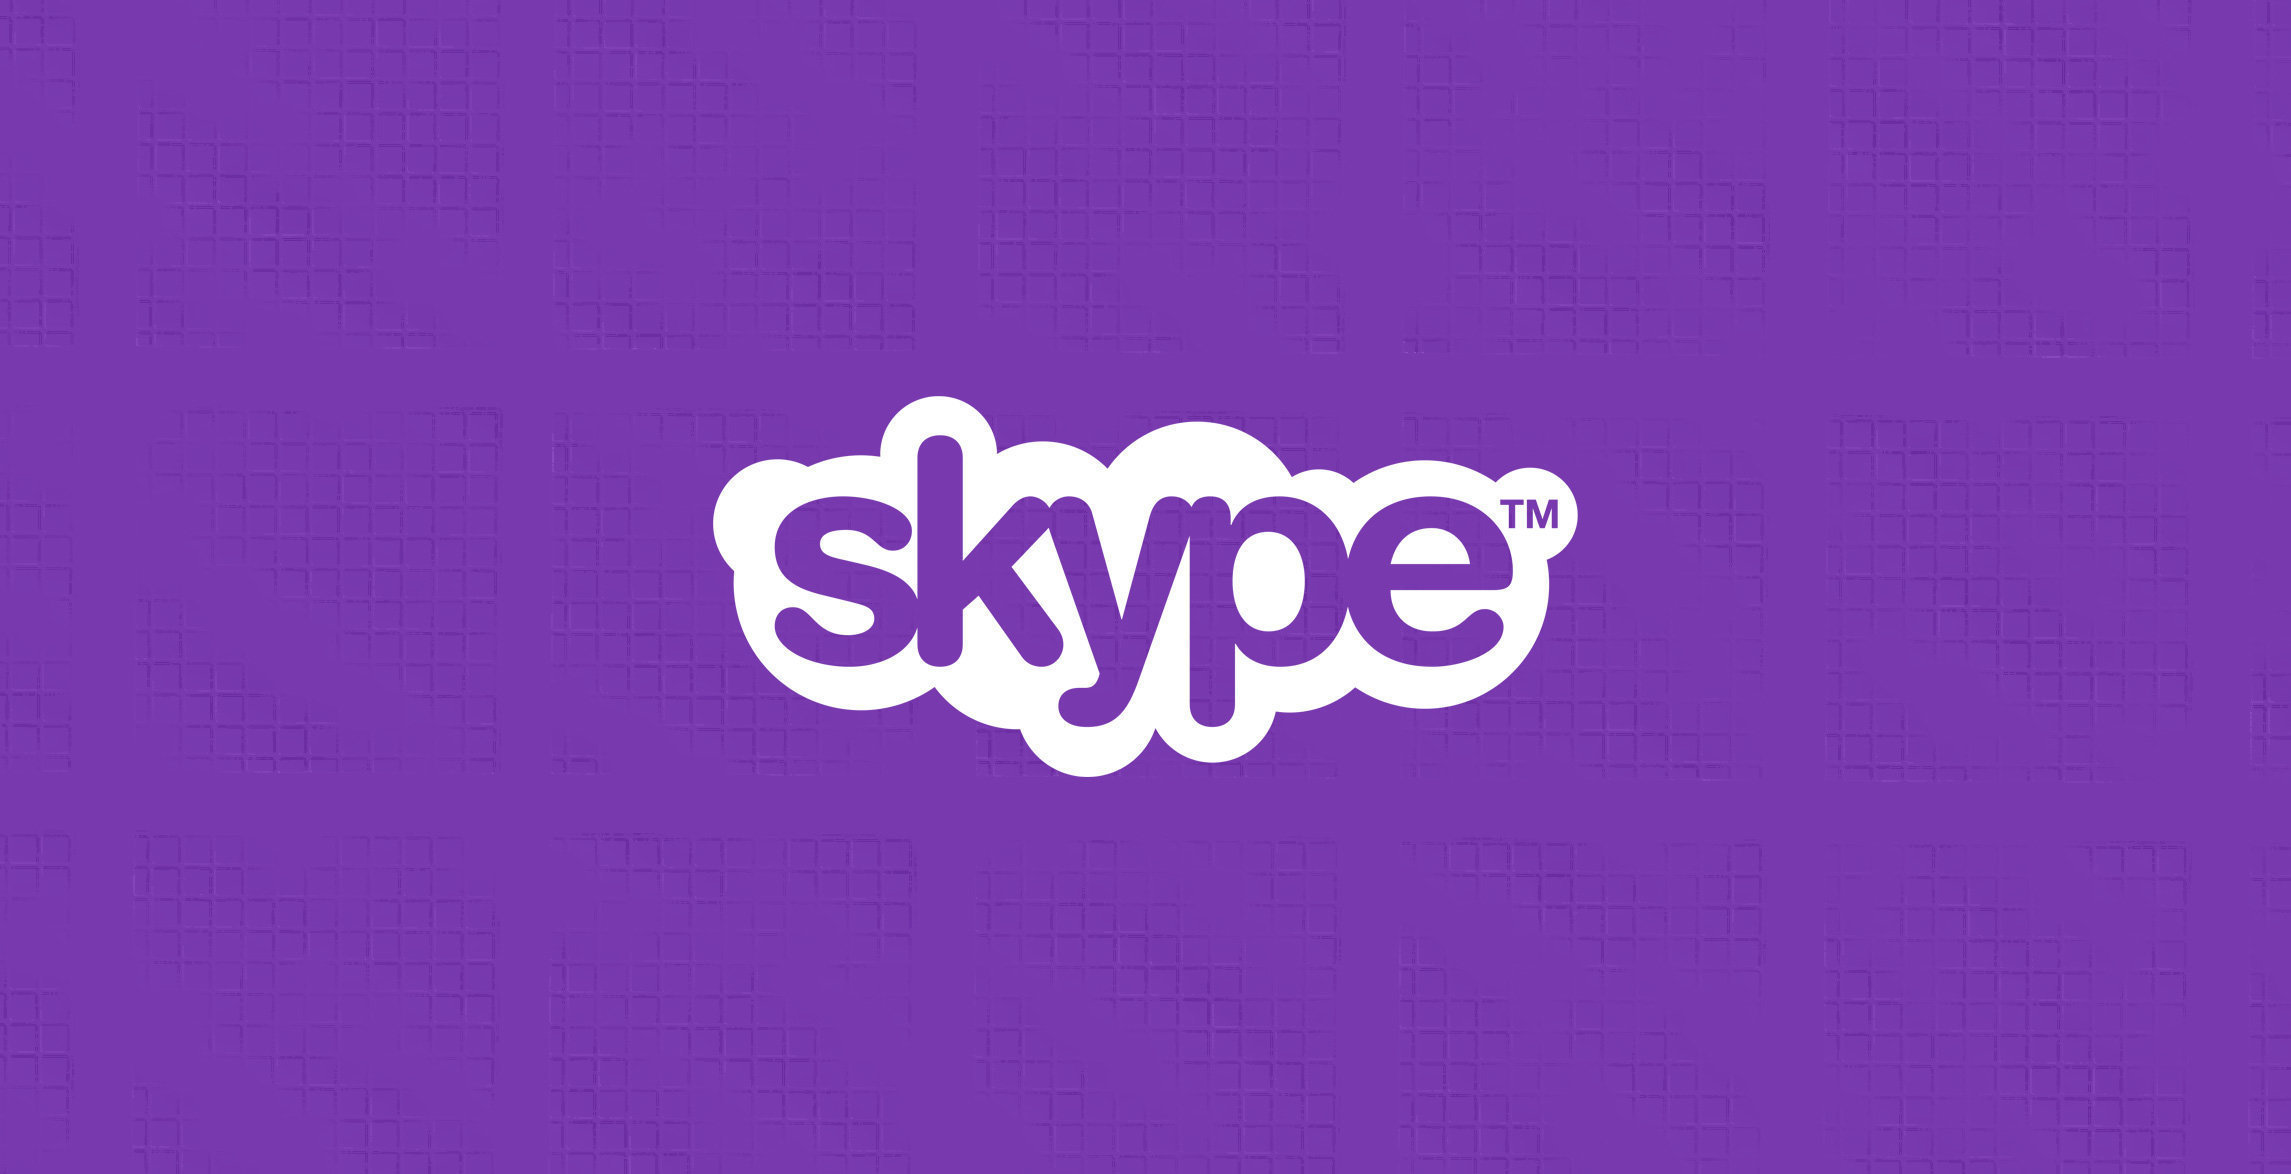 skype-logo-affant-purple